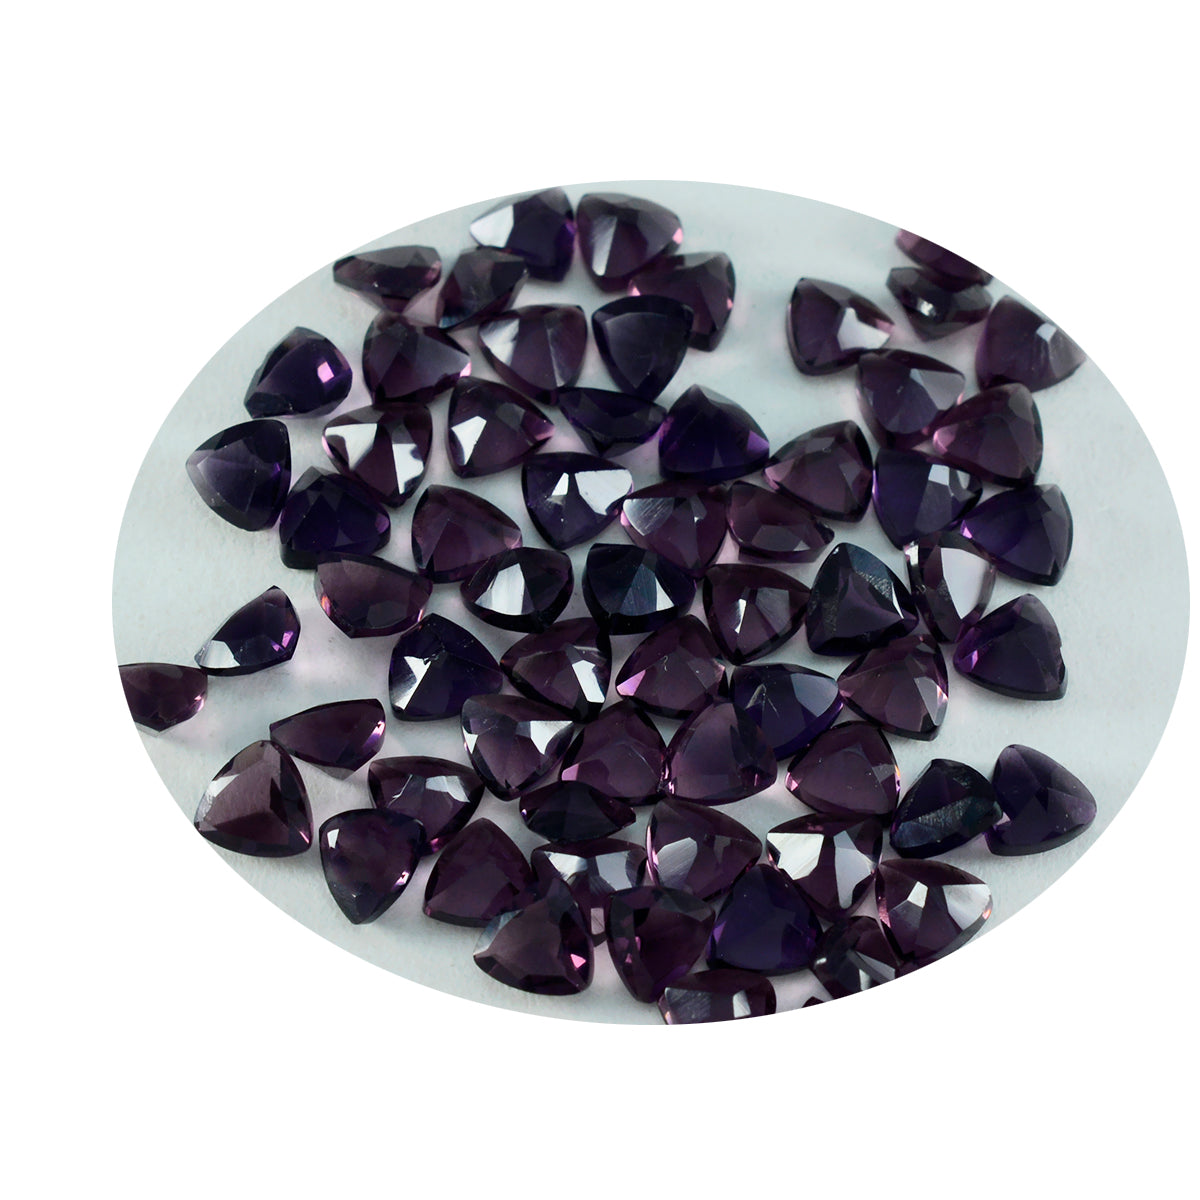 Riyogems 1PC Purple Amethyst CZ Faceted 5x5 mm Trillion Shape A1 Quality Loose Gem